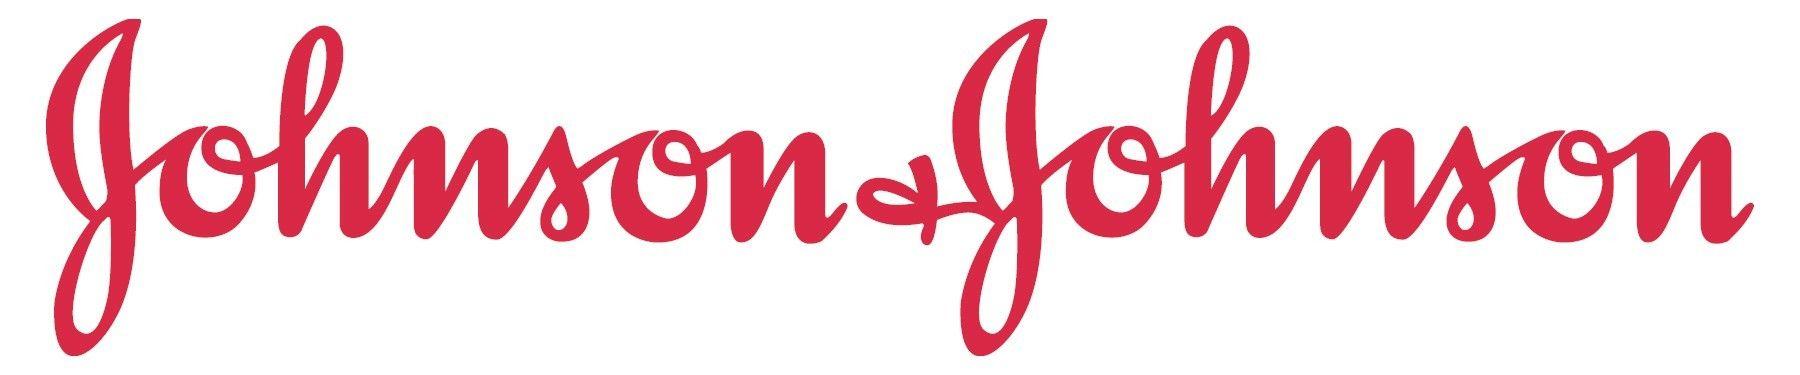 Johnson and Johnson Logo - Janssen Biotech Inc., a Johnson & Johnson (JNJ) company, announced ...